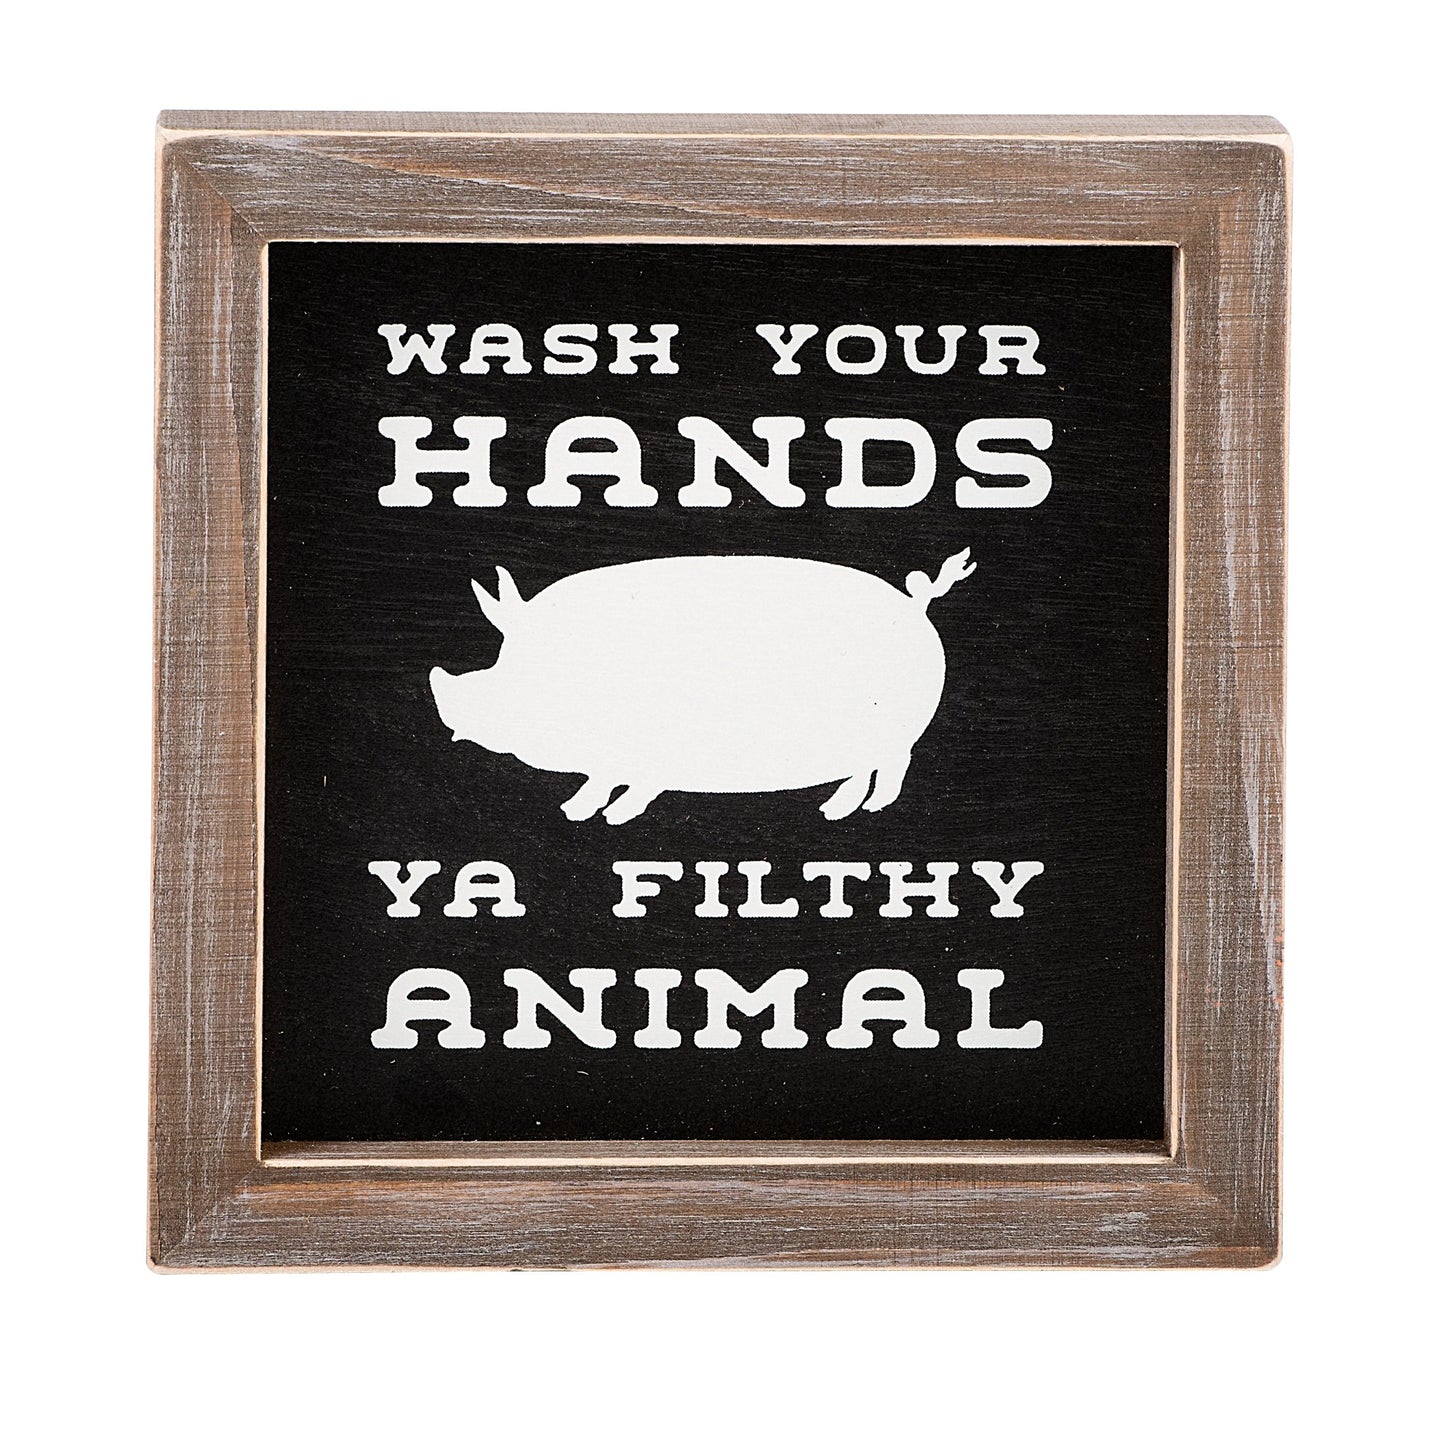 Ya Filthy Animal Framed Sign